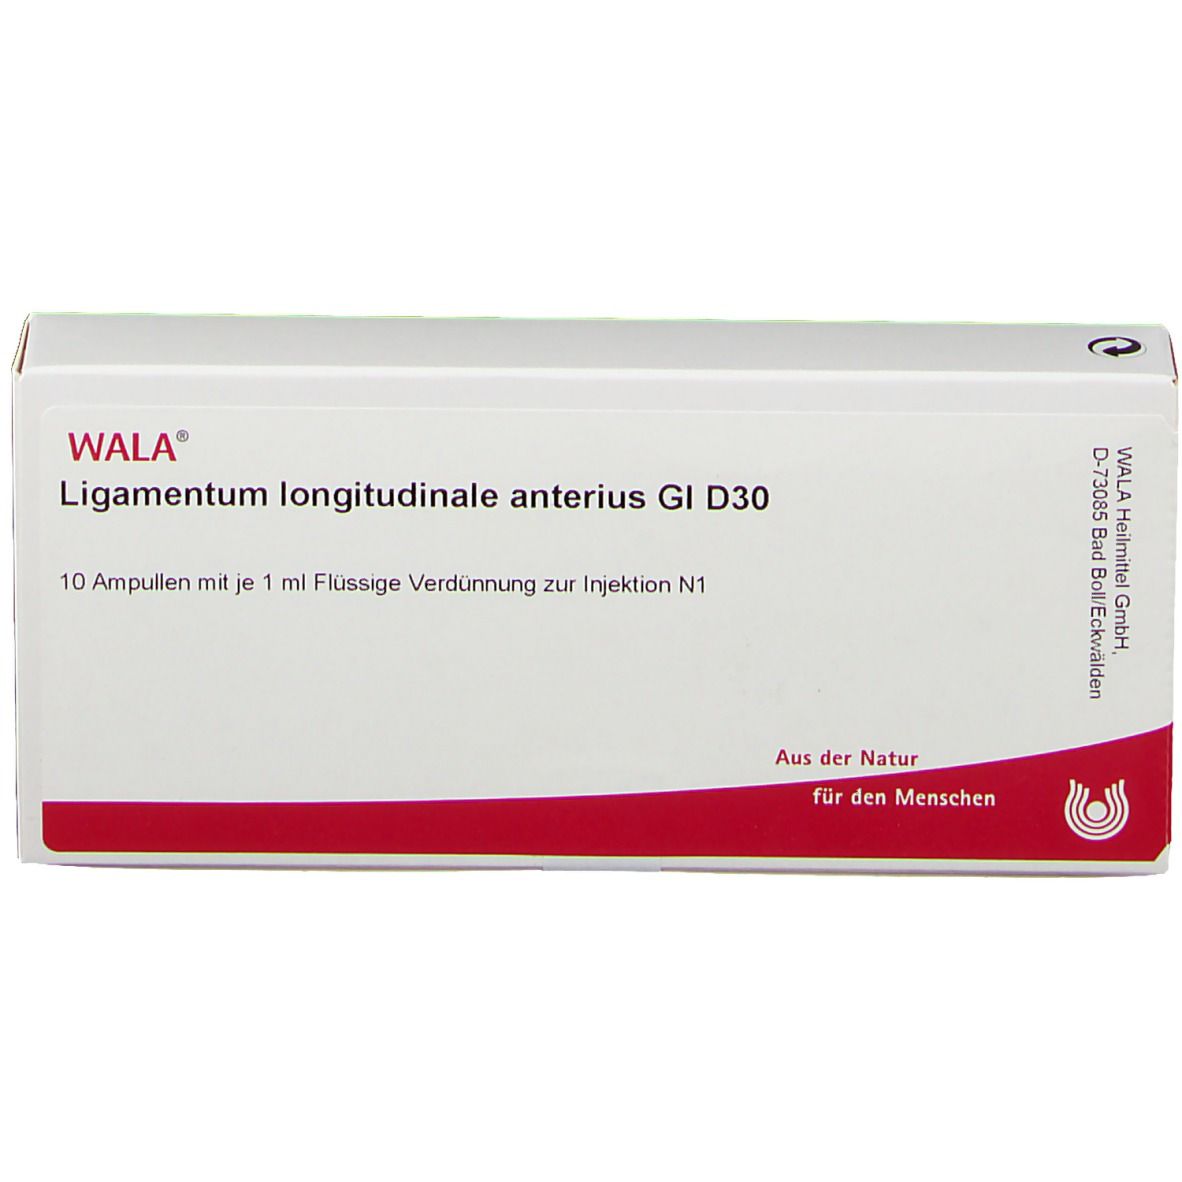 WALA® Ligamentum longitudinale anterius Gl D 30